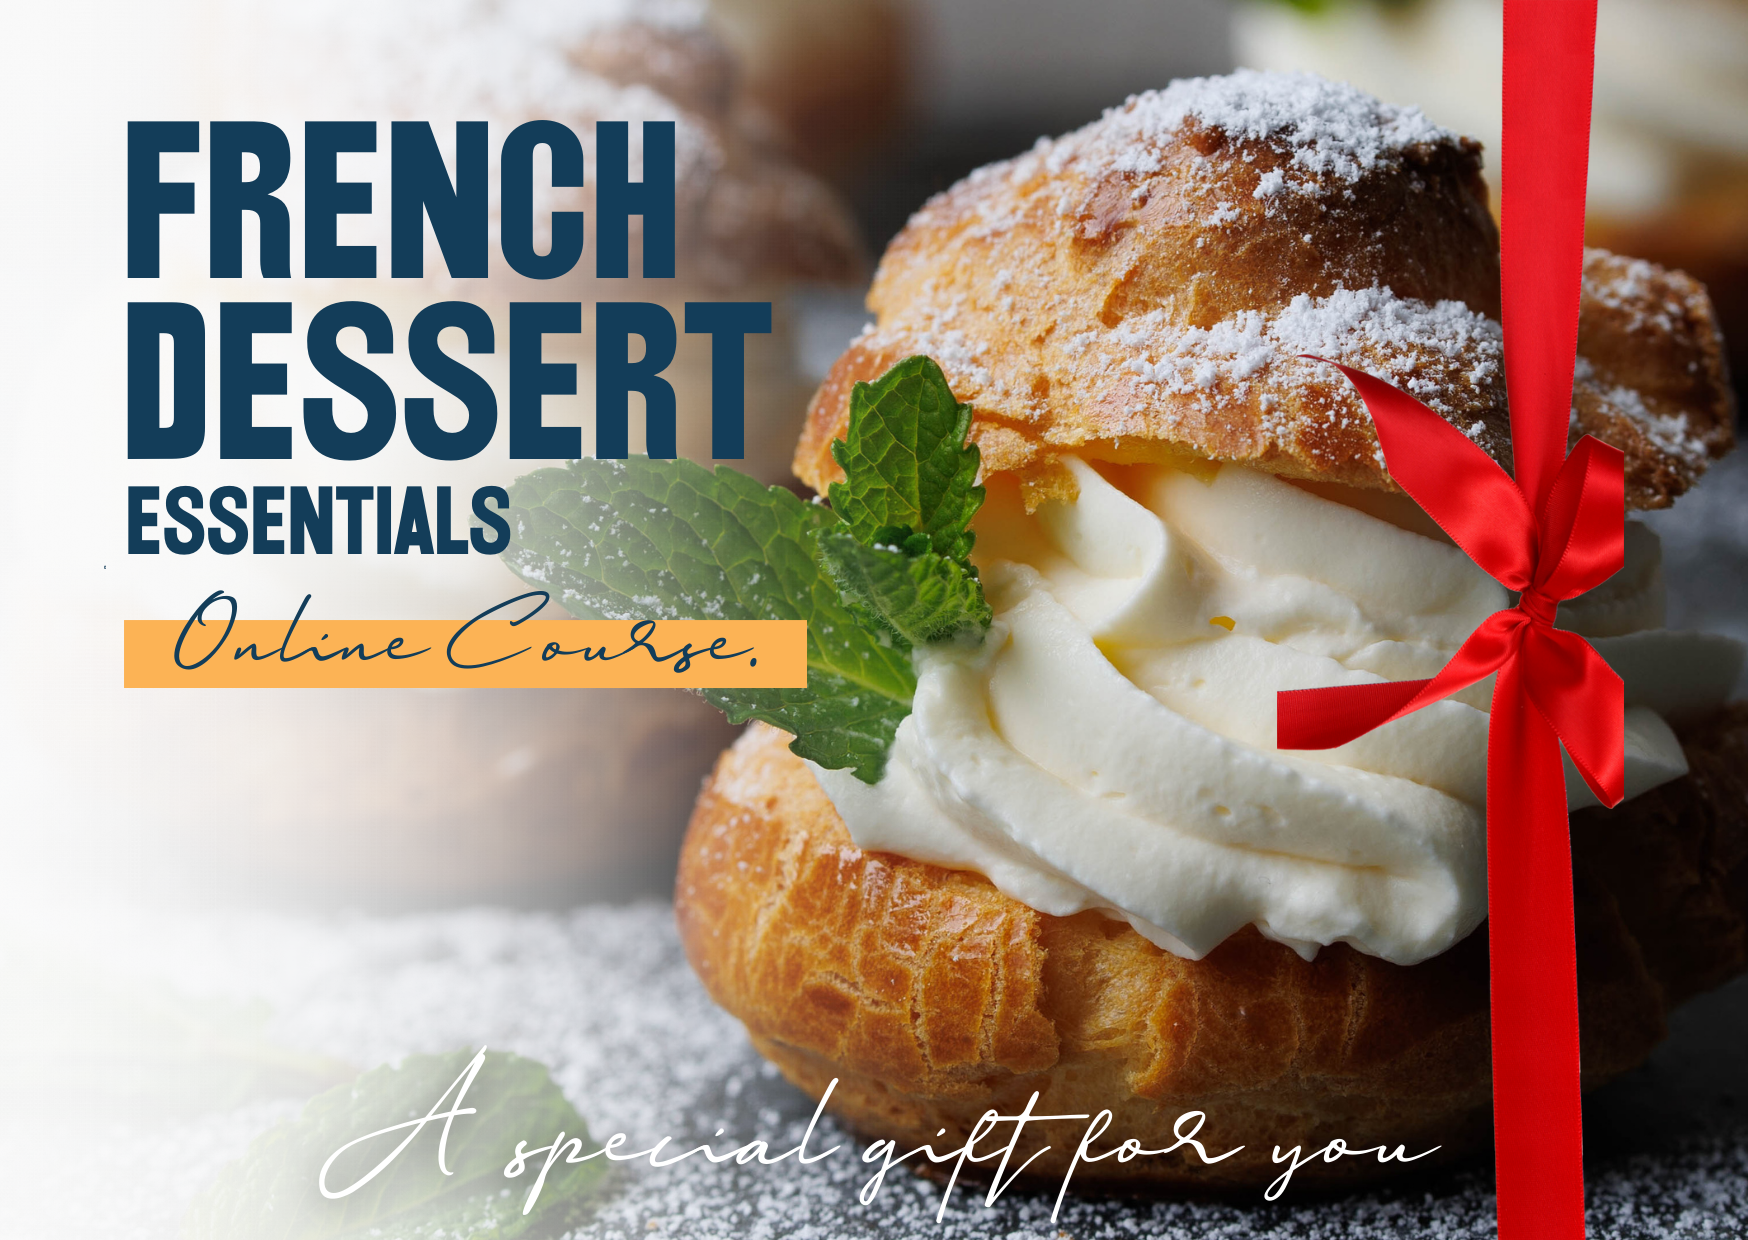 French desserts essentials gift card